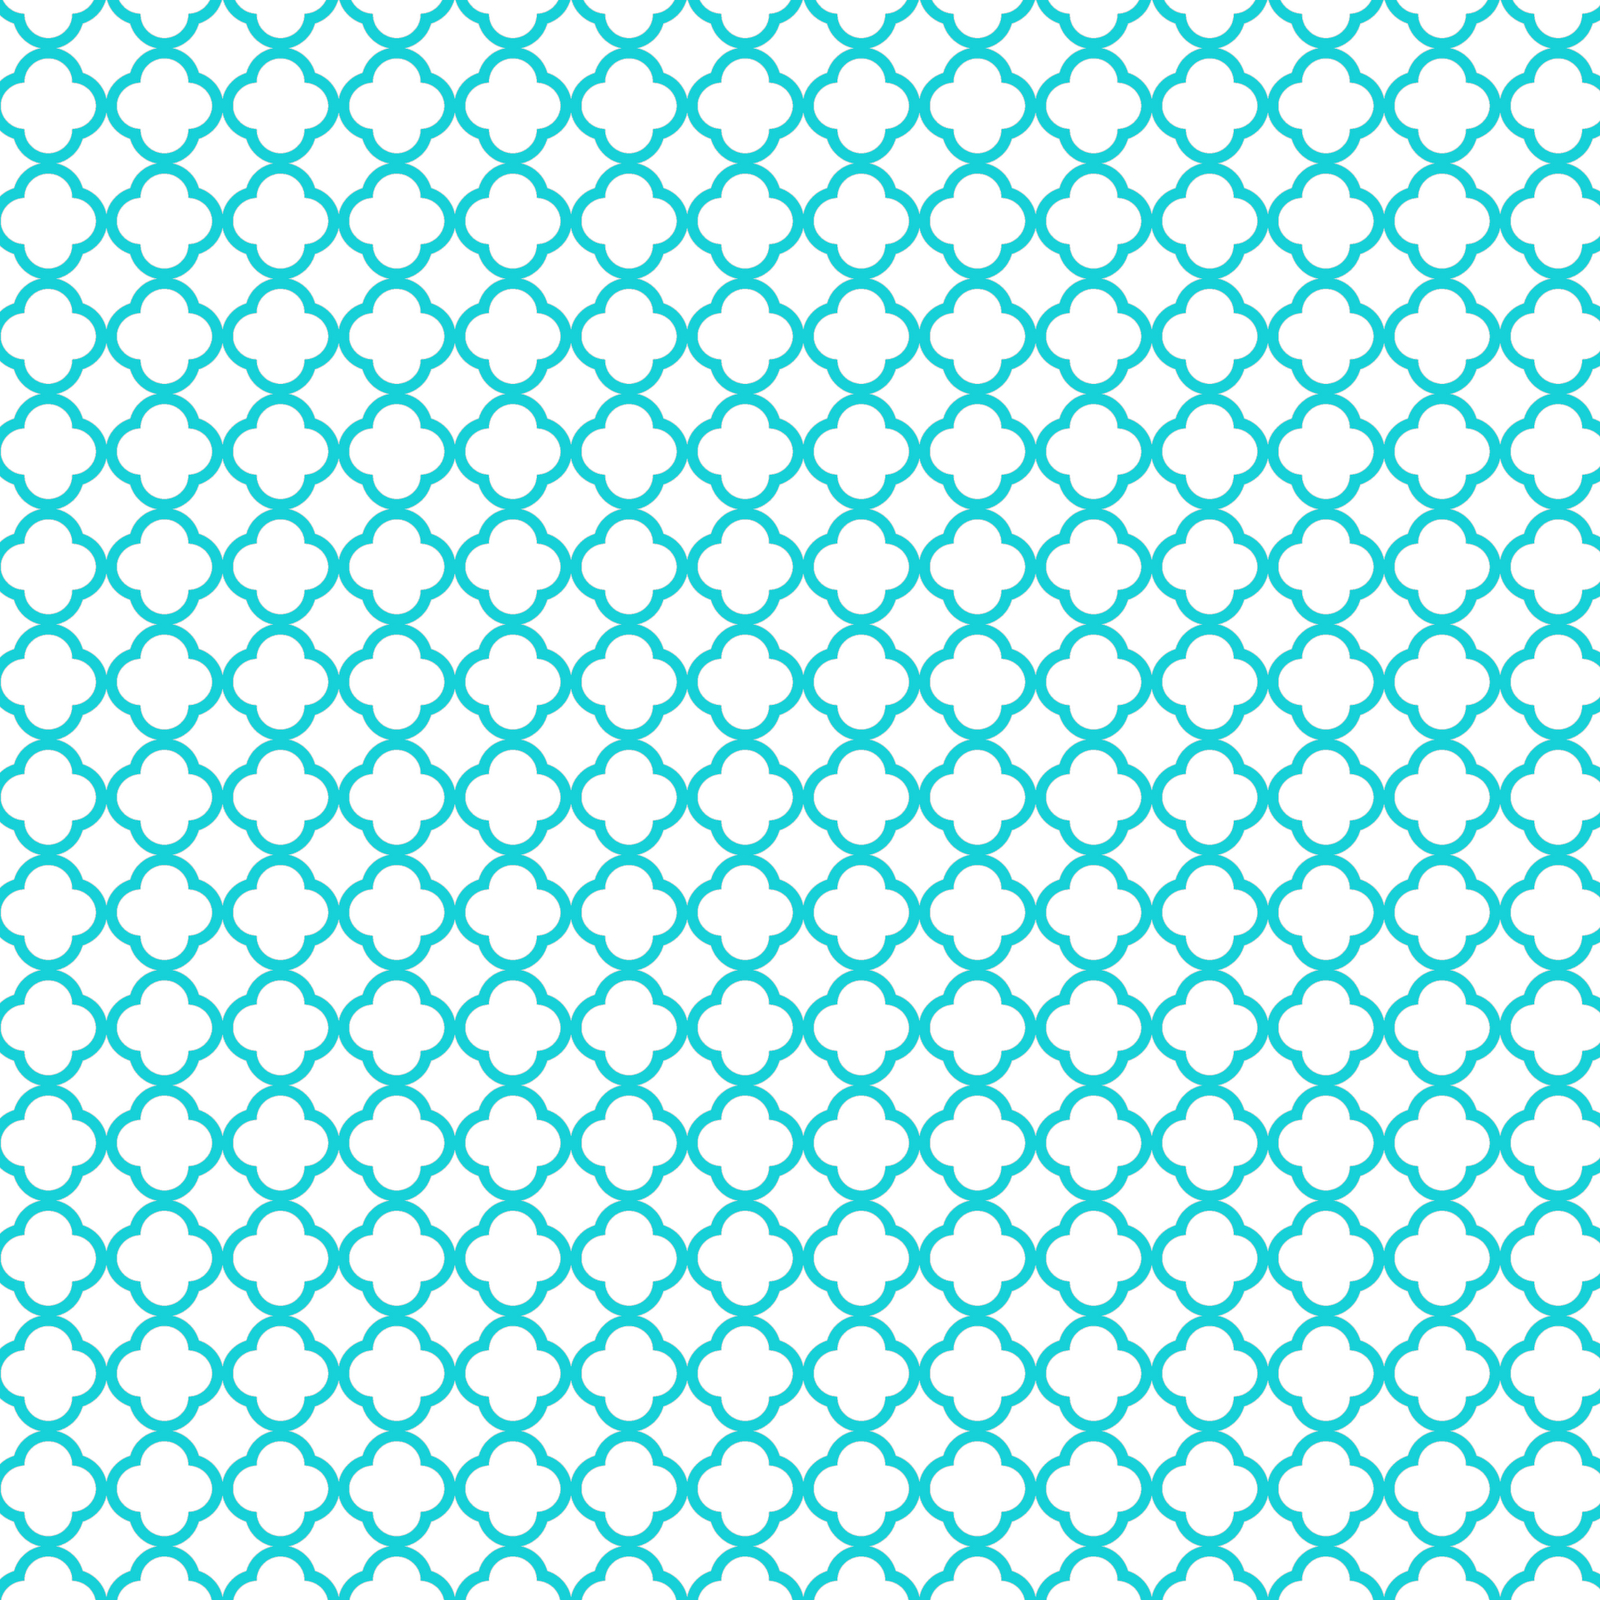 More Free Printable Patterns! - Free Printable Moroccan Pattern